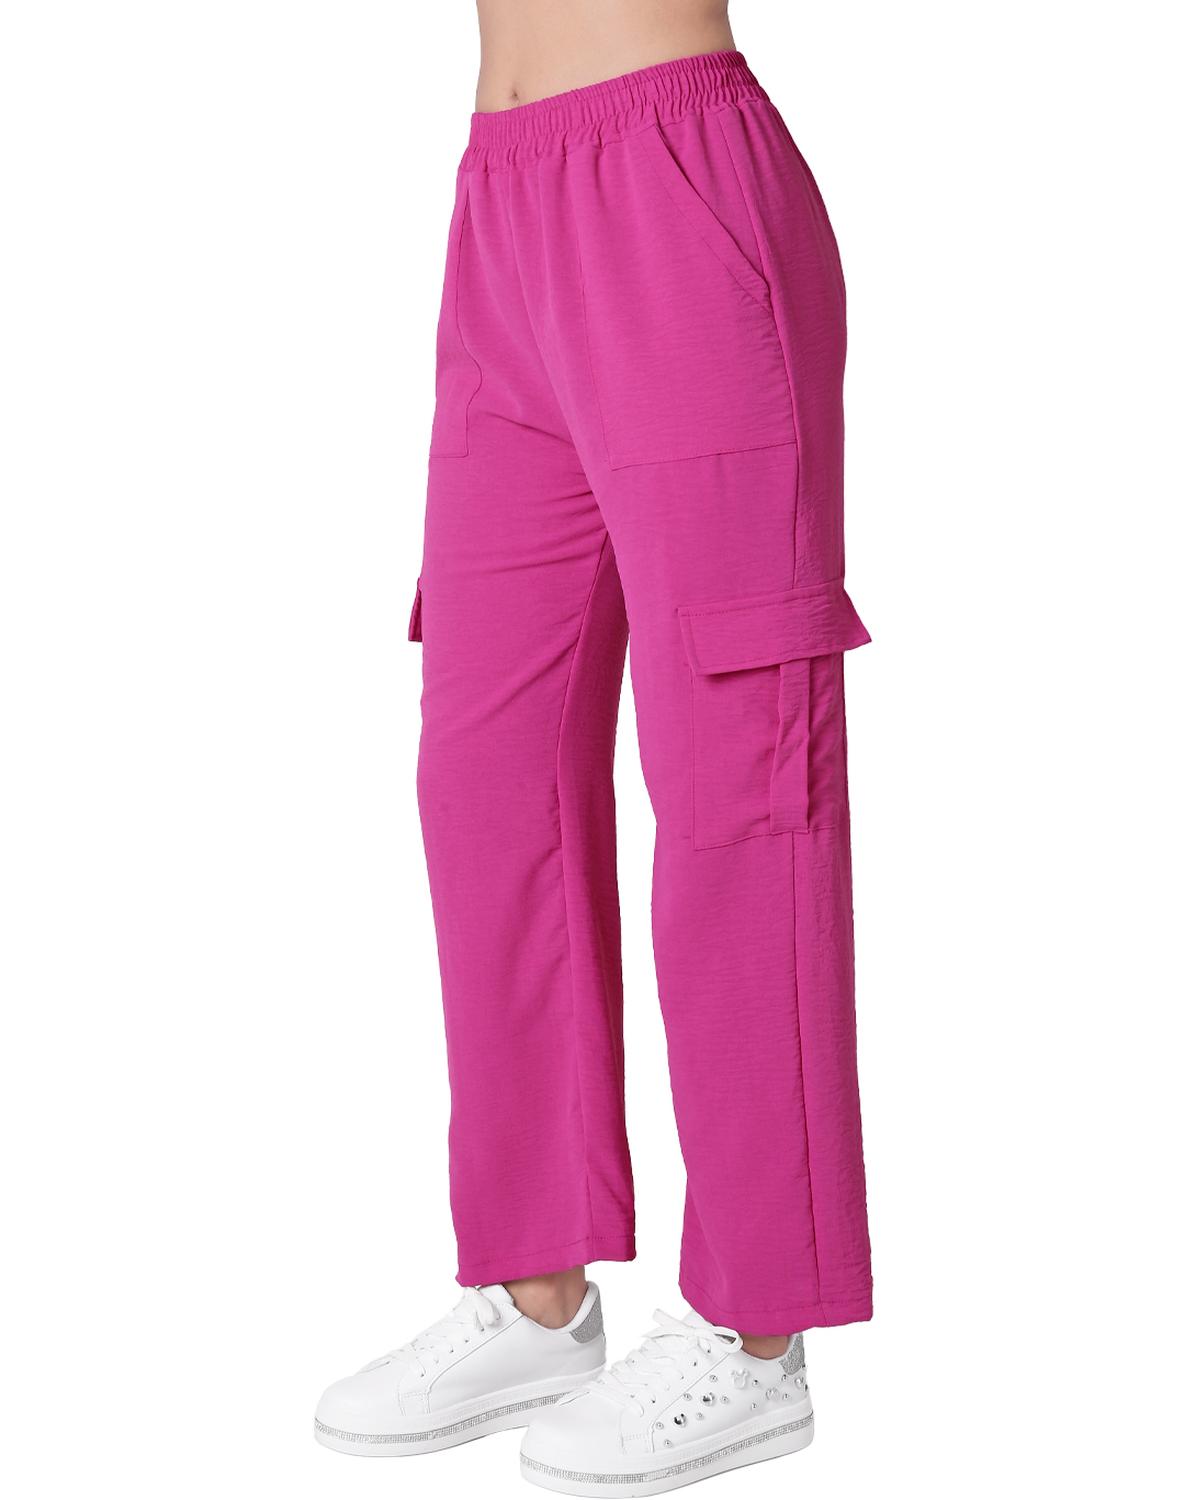 Pantalón Moda Cargo Mujer Rosa Stfashion 52404634